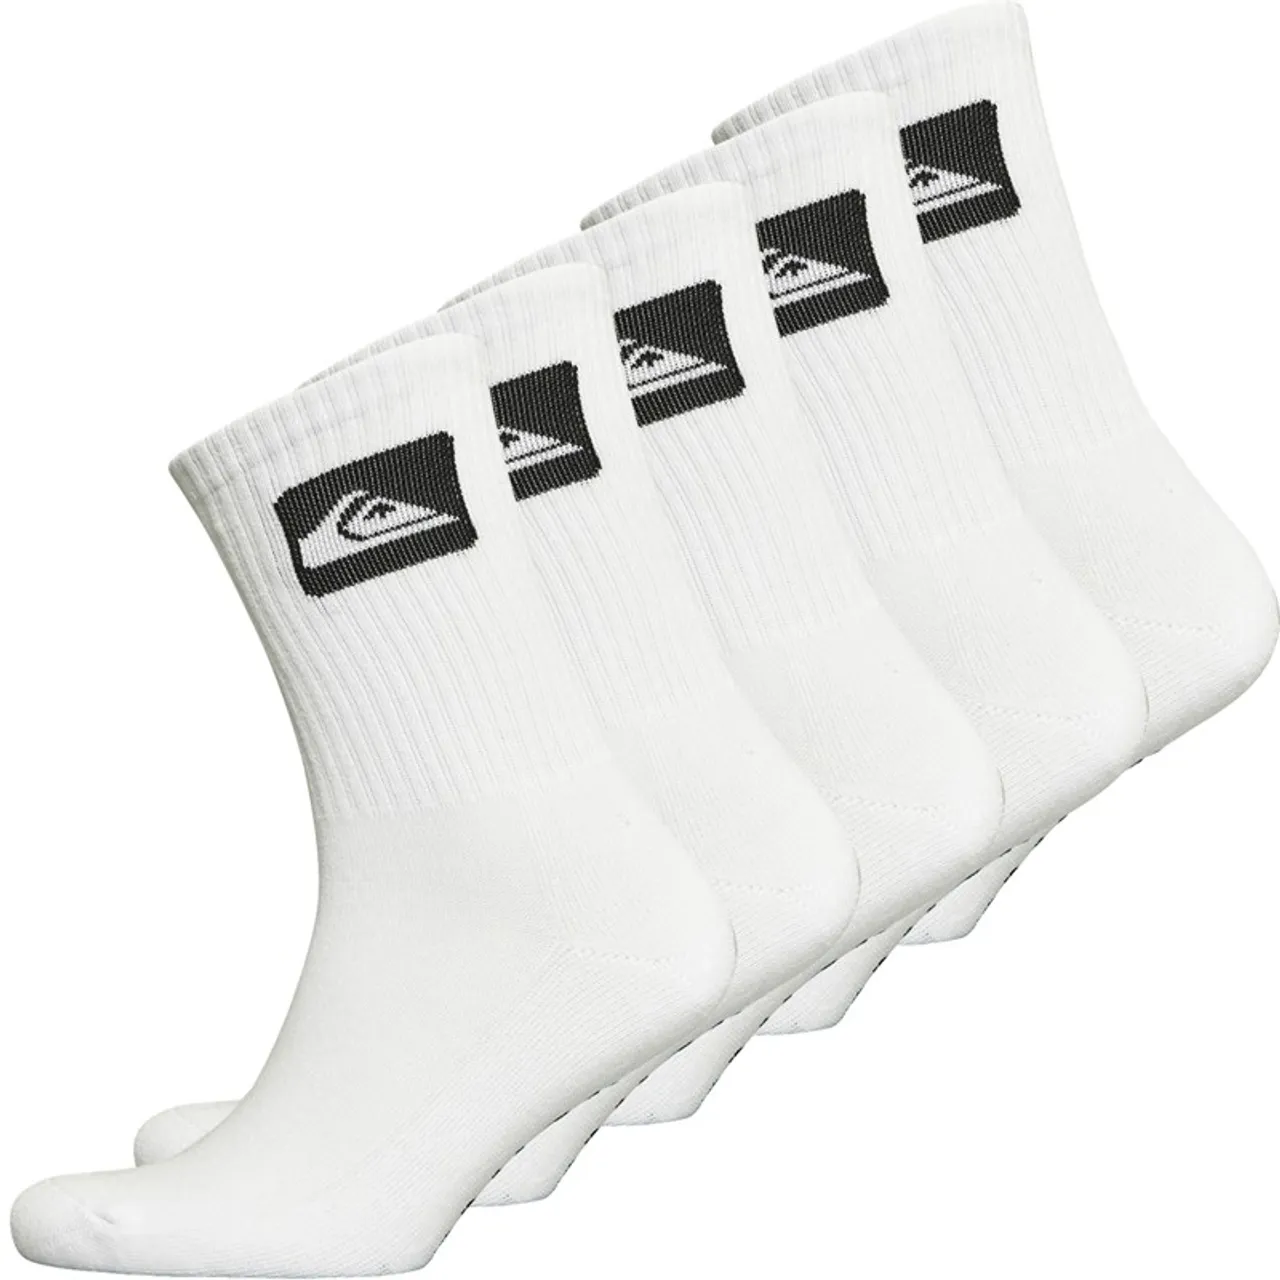 Quiksilver Mens Five Pack Crew Socks White